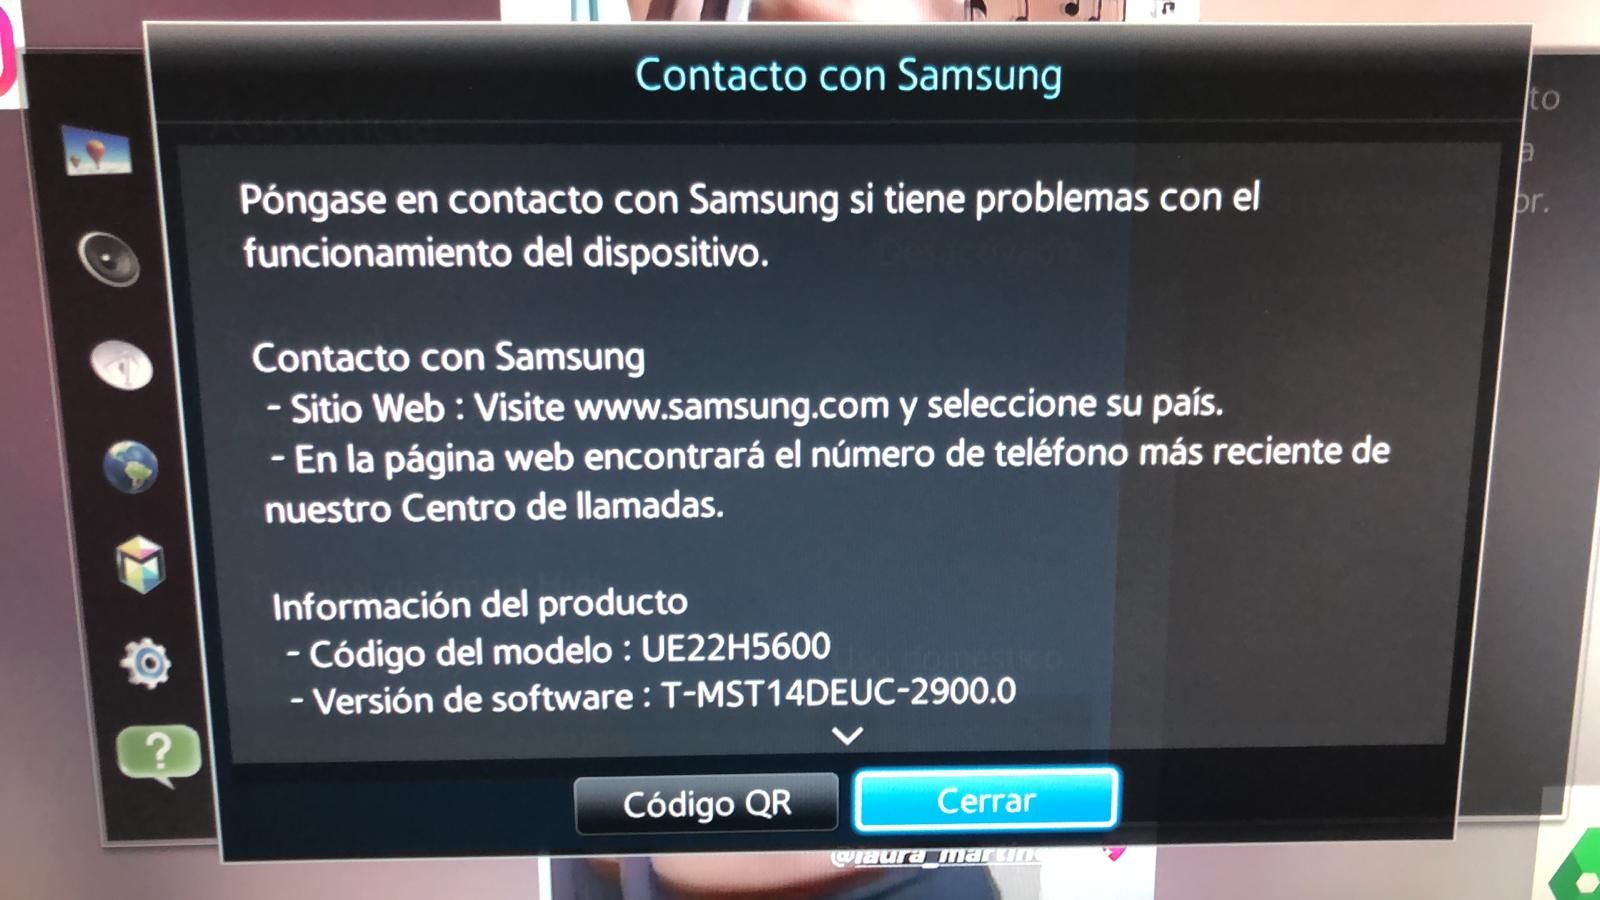 Samsung UE22H5600 - Samsung Community